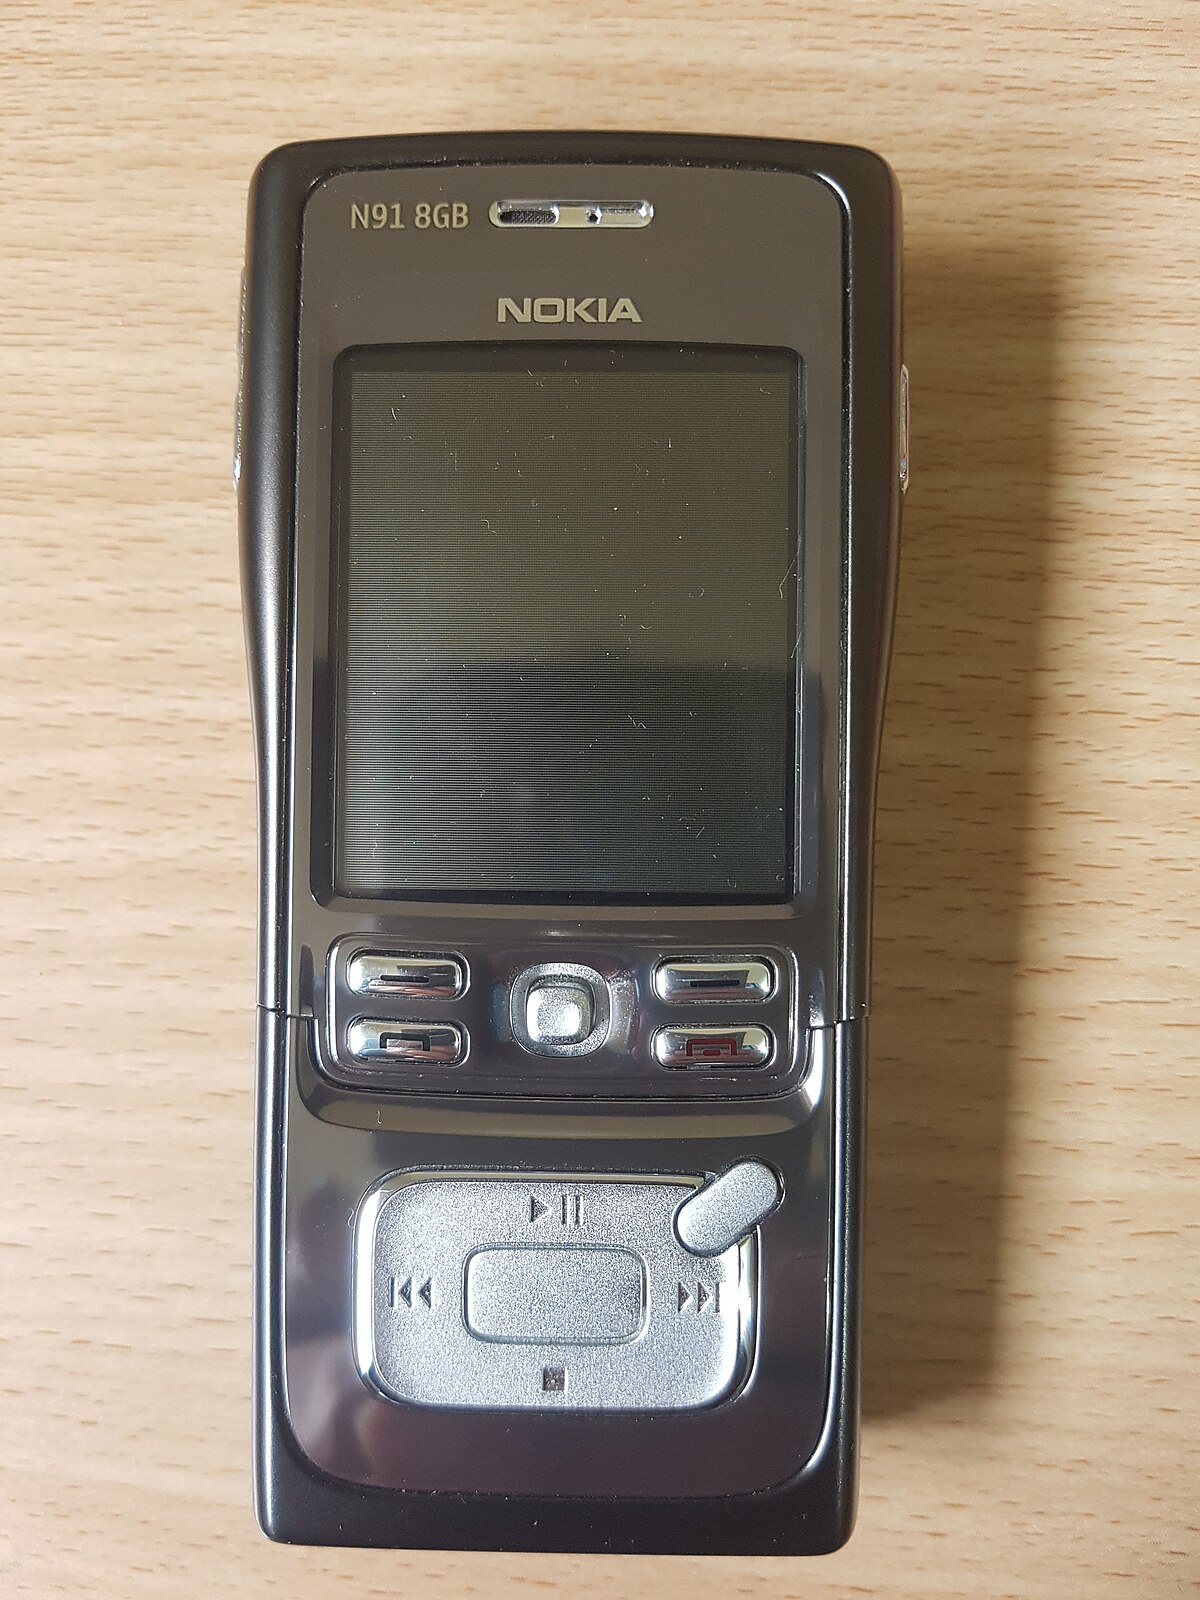 Nokia N91 - Wikipedia